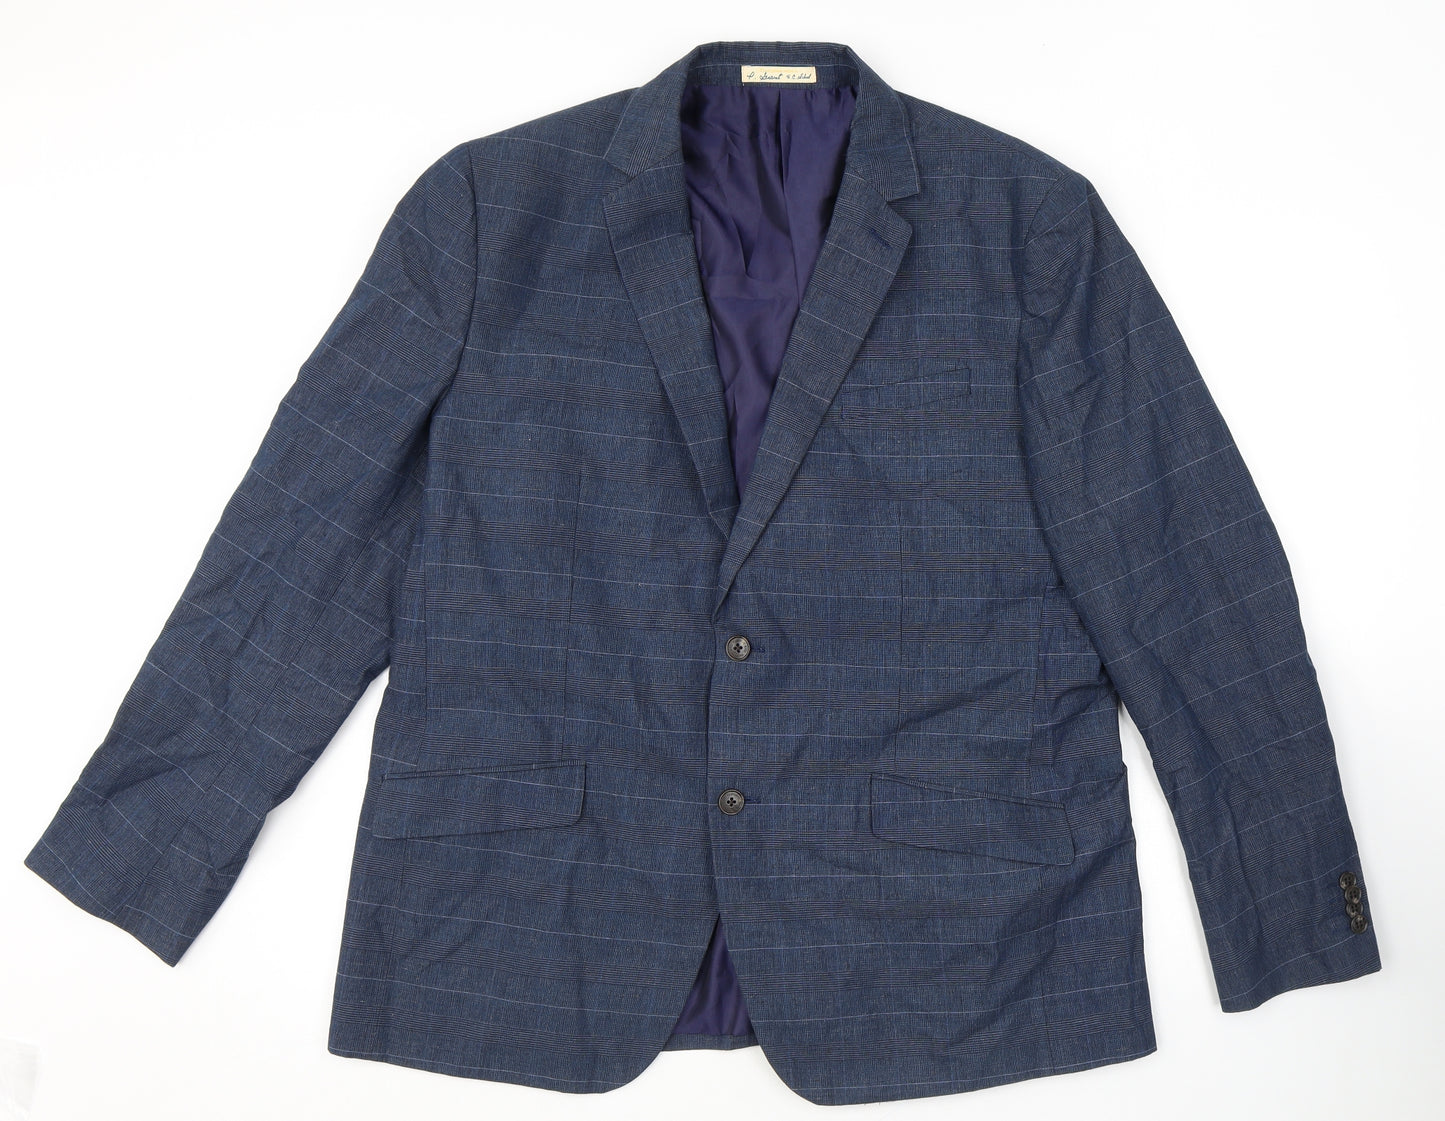 Debenhams Mens Blue Check Cotton Jacket Suit Jacket Size 46 Regular